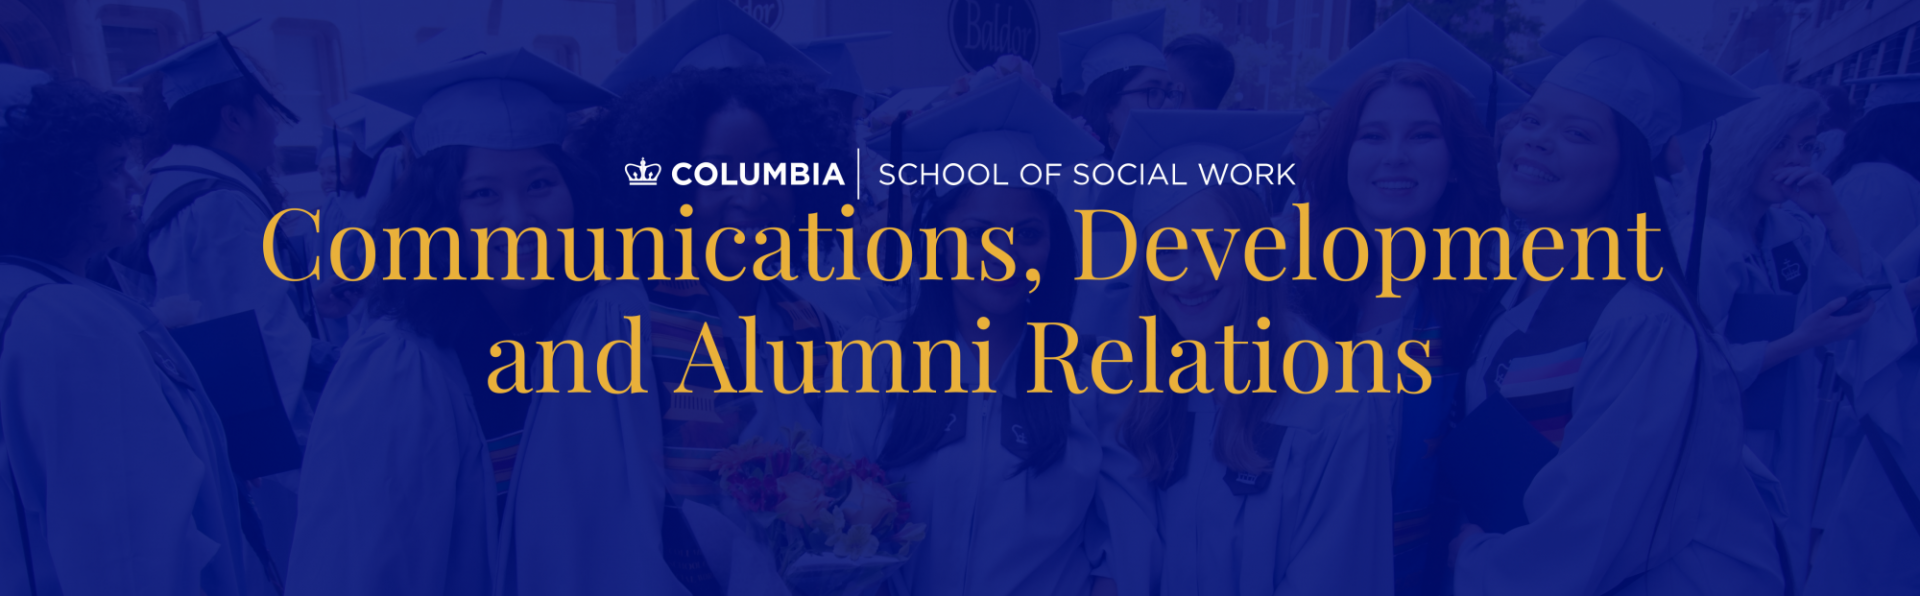 Graduates at Columbia in regalia. Text says "Communications, Development and Alumni Relations"